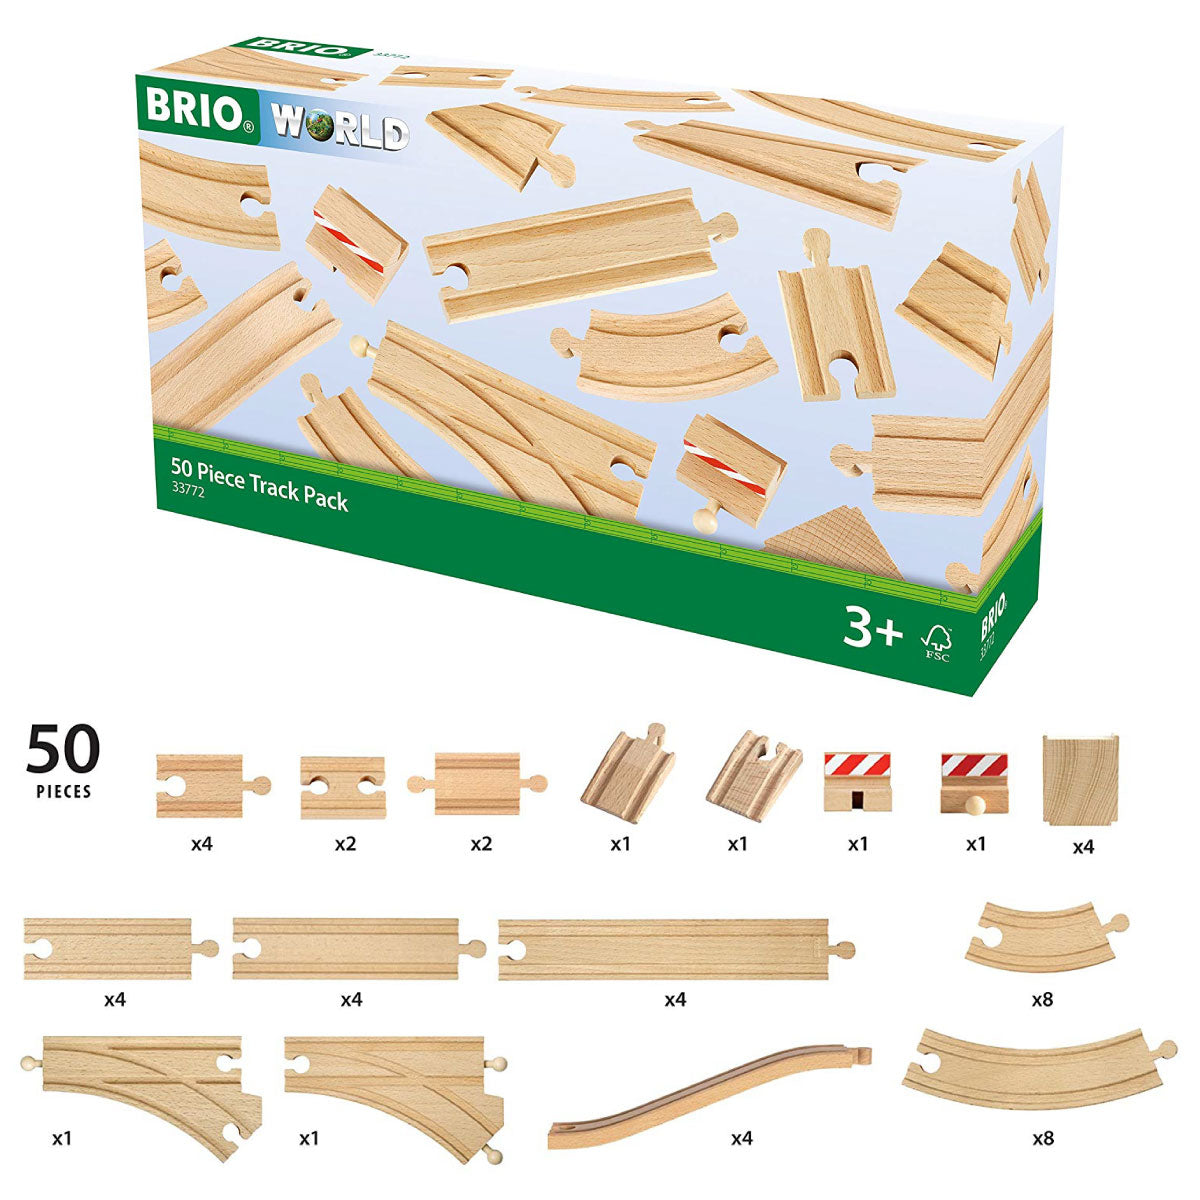 Brio 50 Piece Track Set